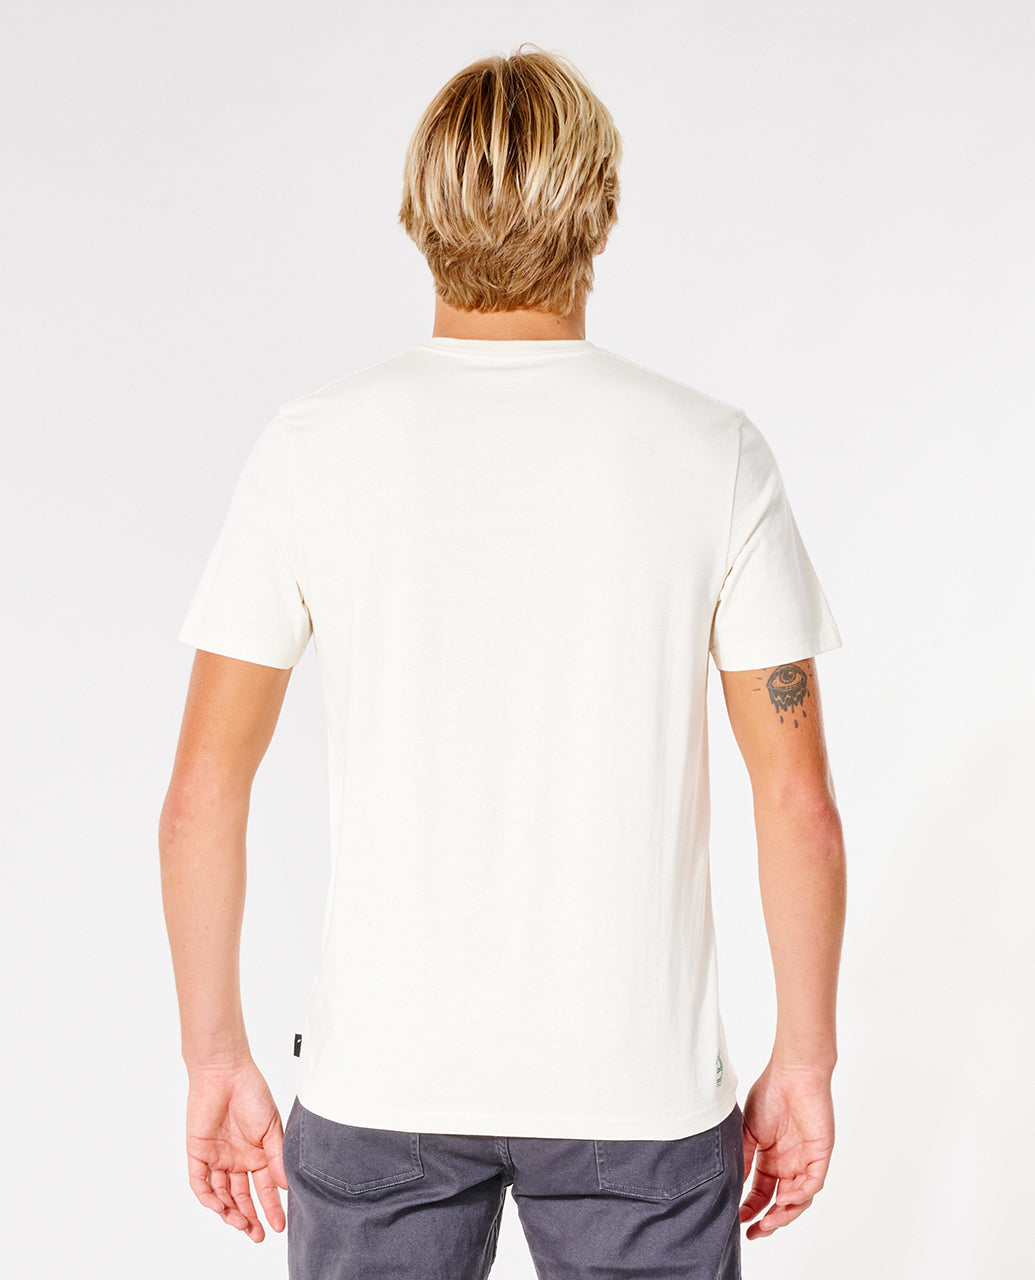 [SALE] Men's BELLS PRO short sleeve T-shirt